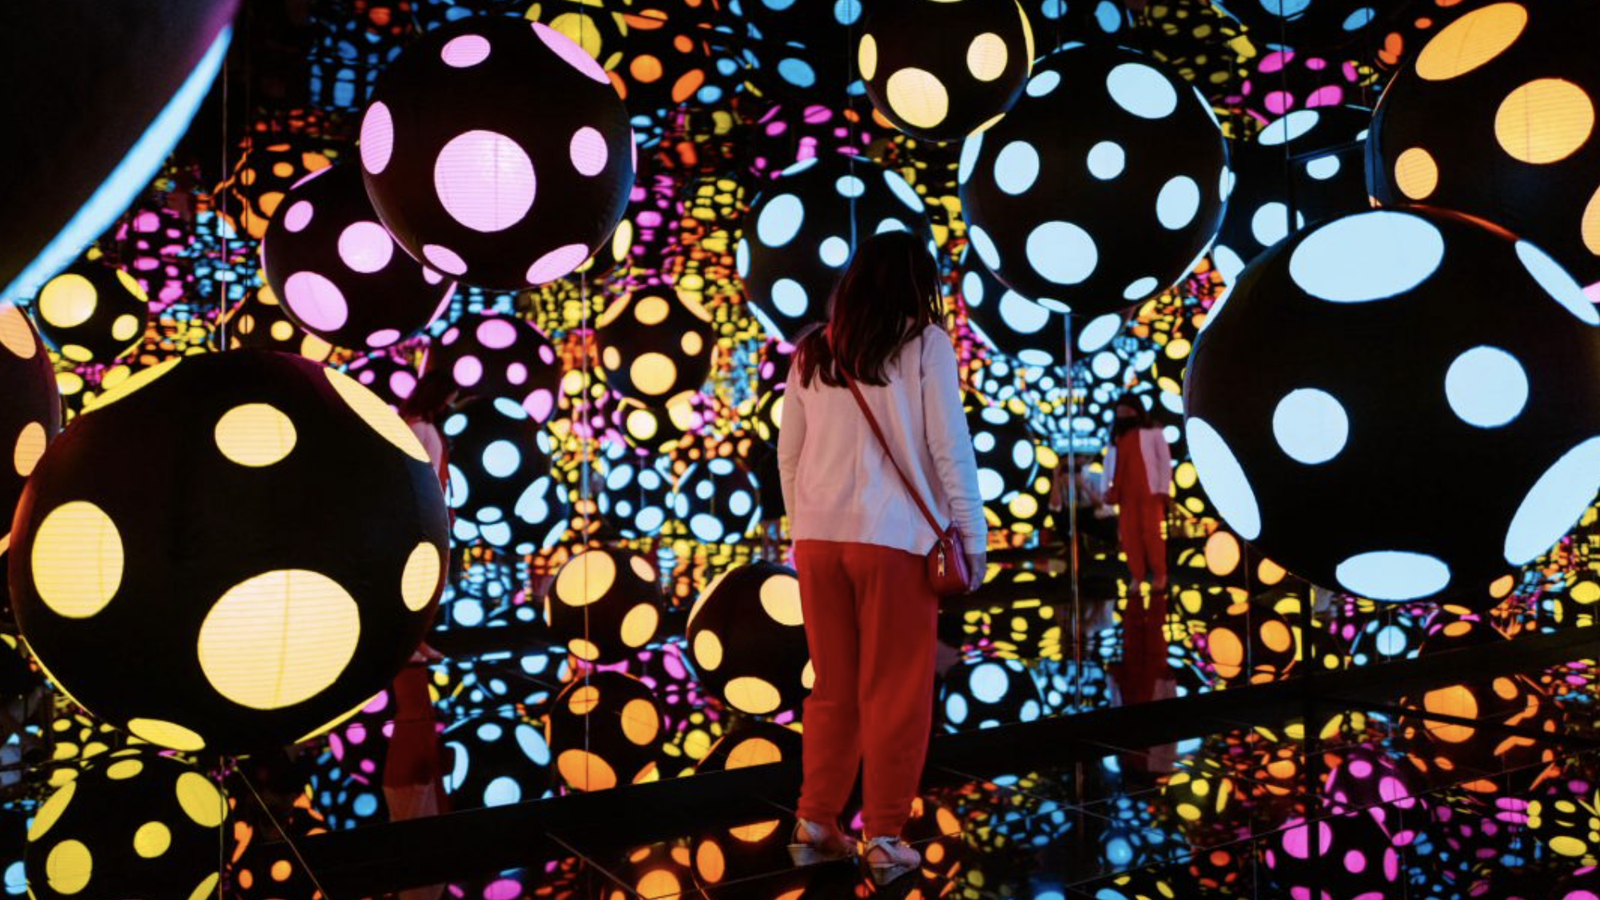 Yayoi Kusama exhibition 2023 Hirshhorn extends popular display Axios